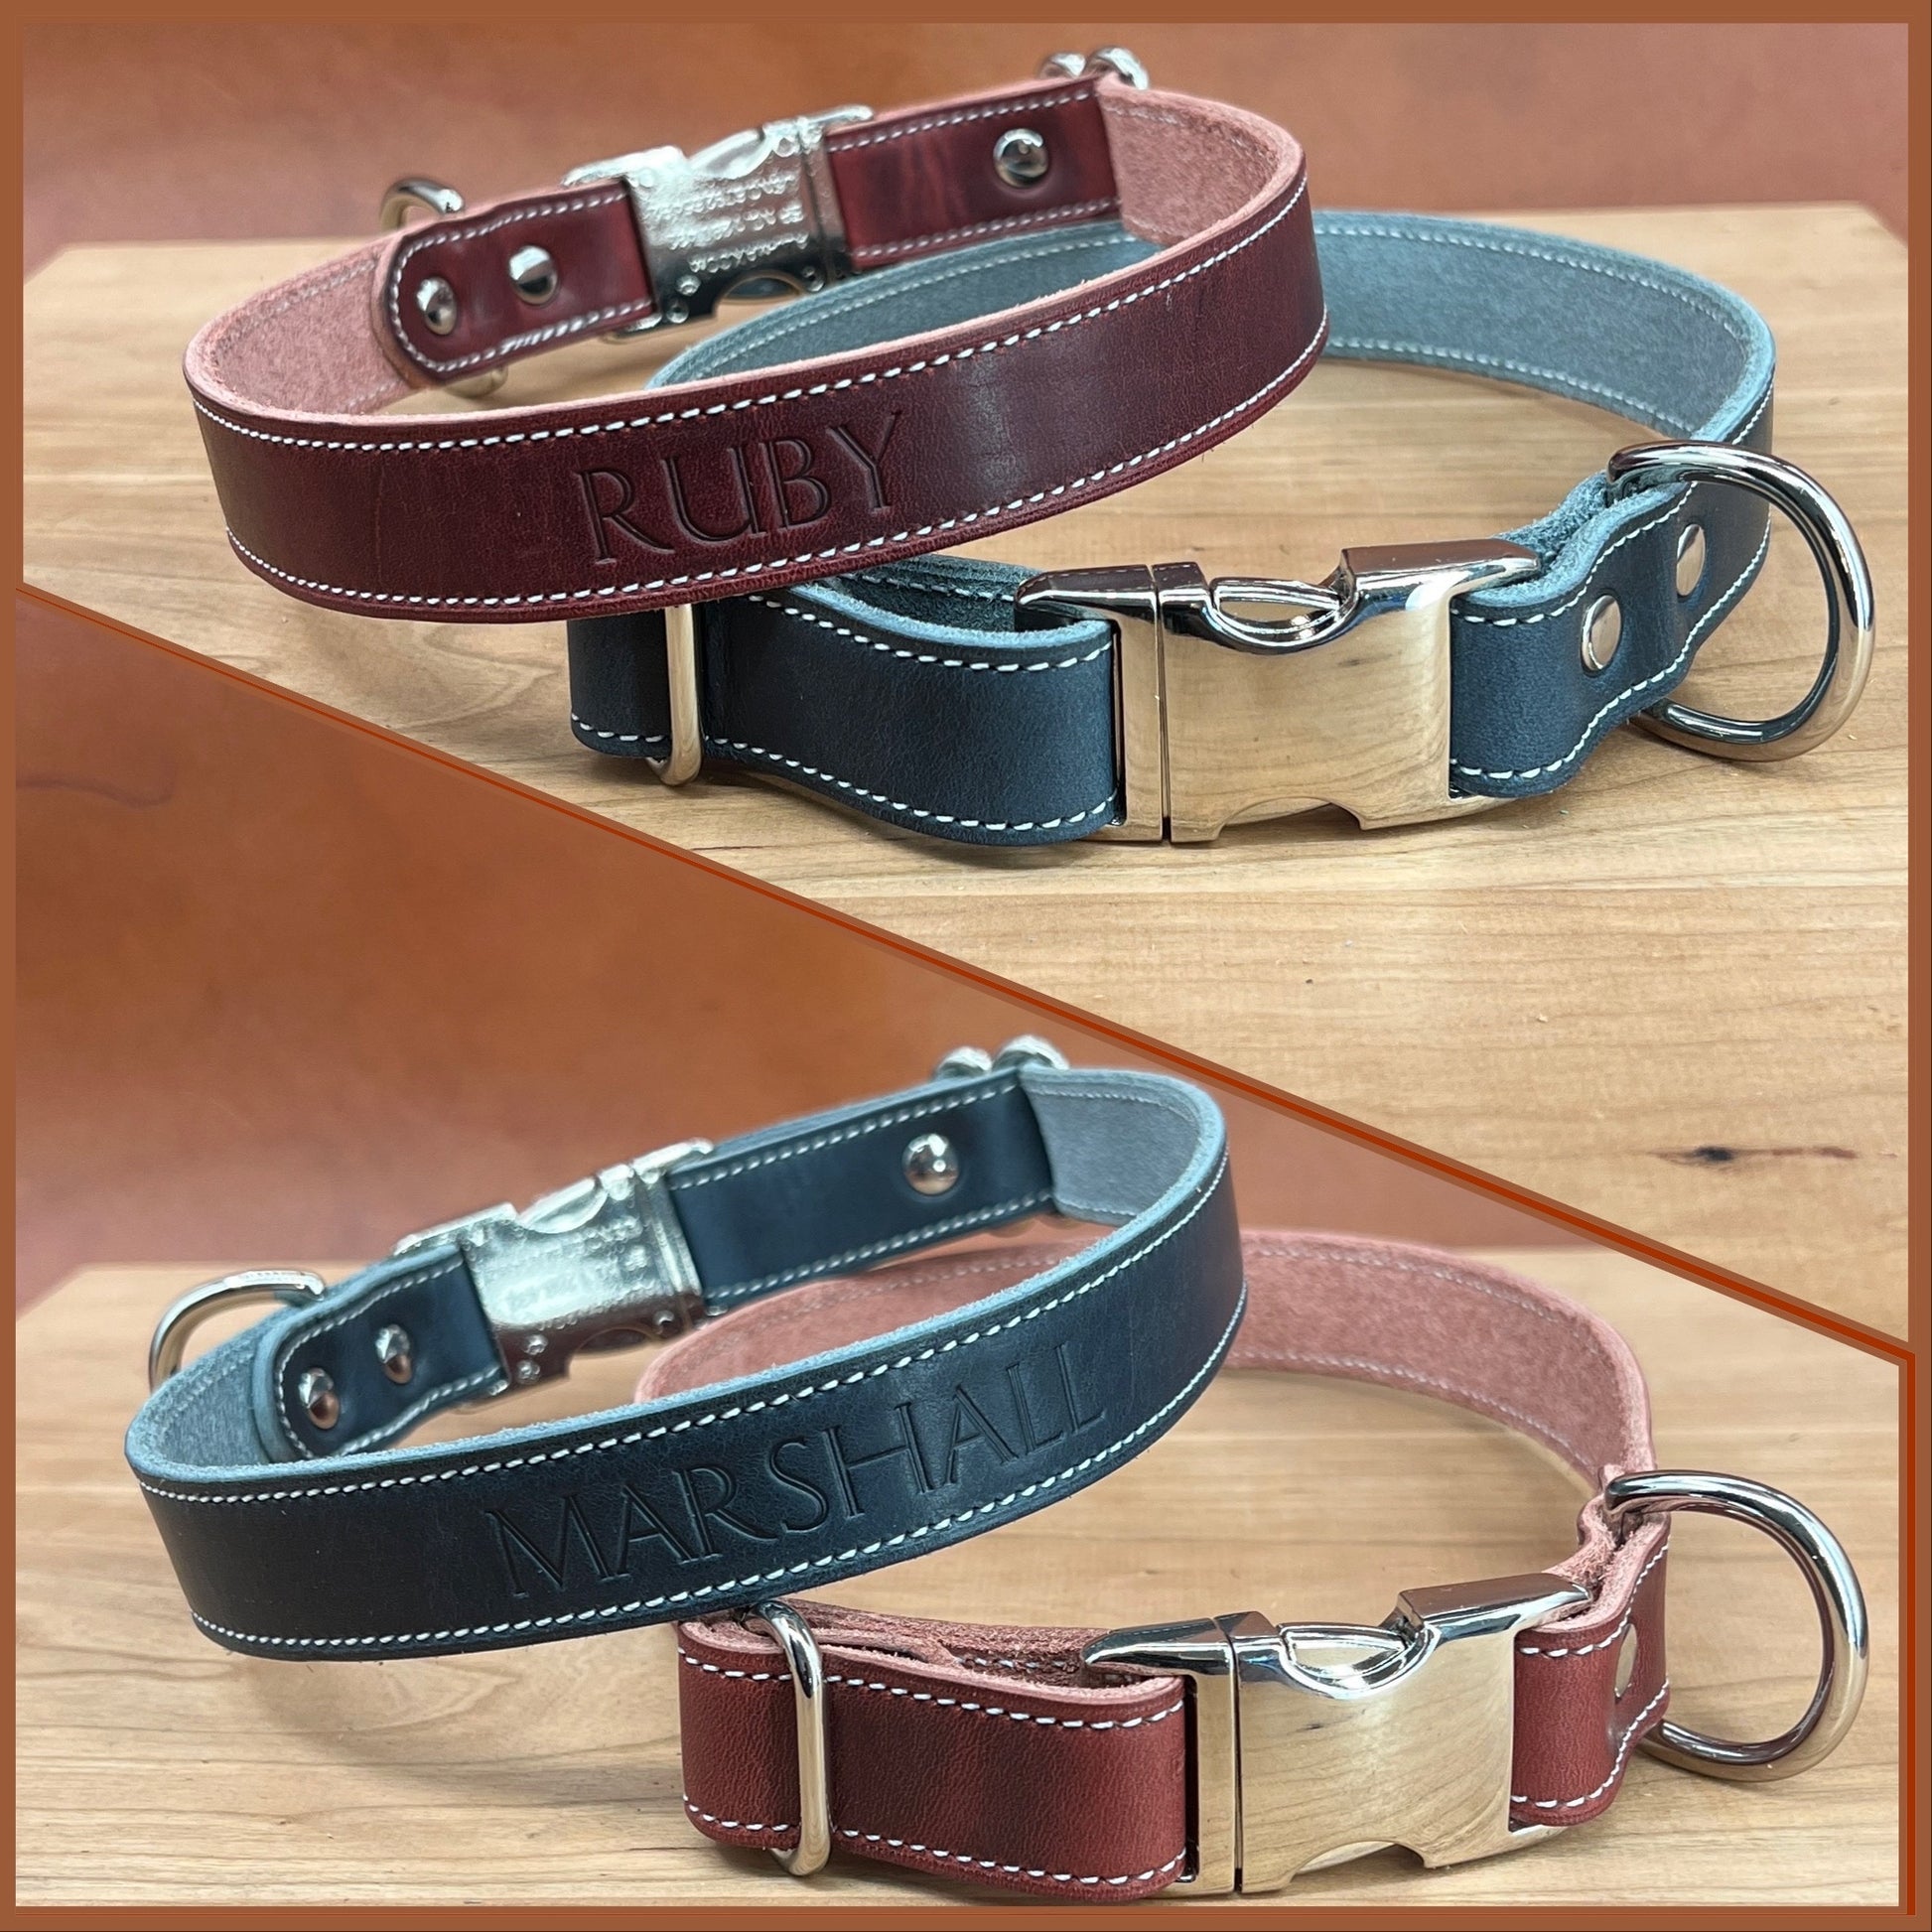 Fashion Designer Dog collar handmade adjustable 1